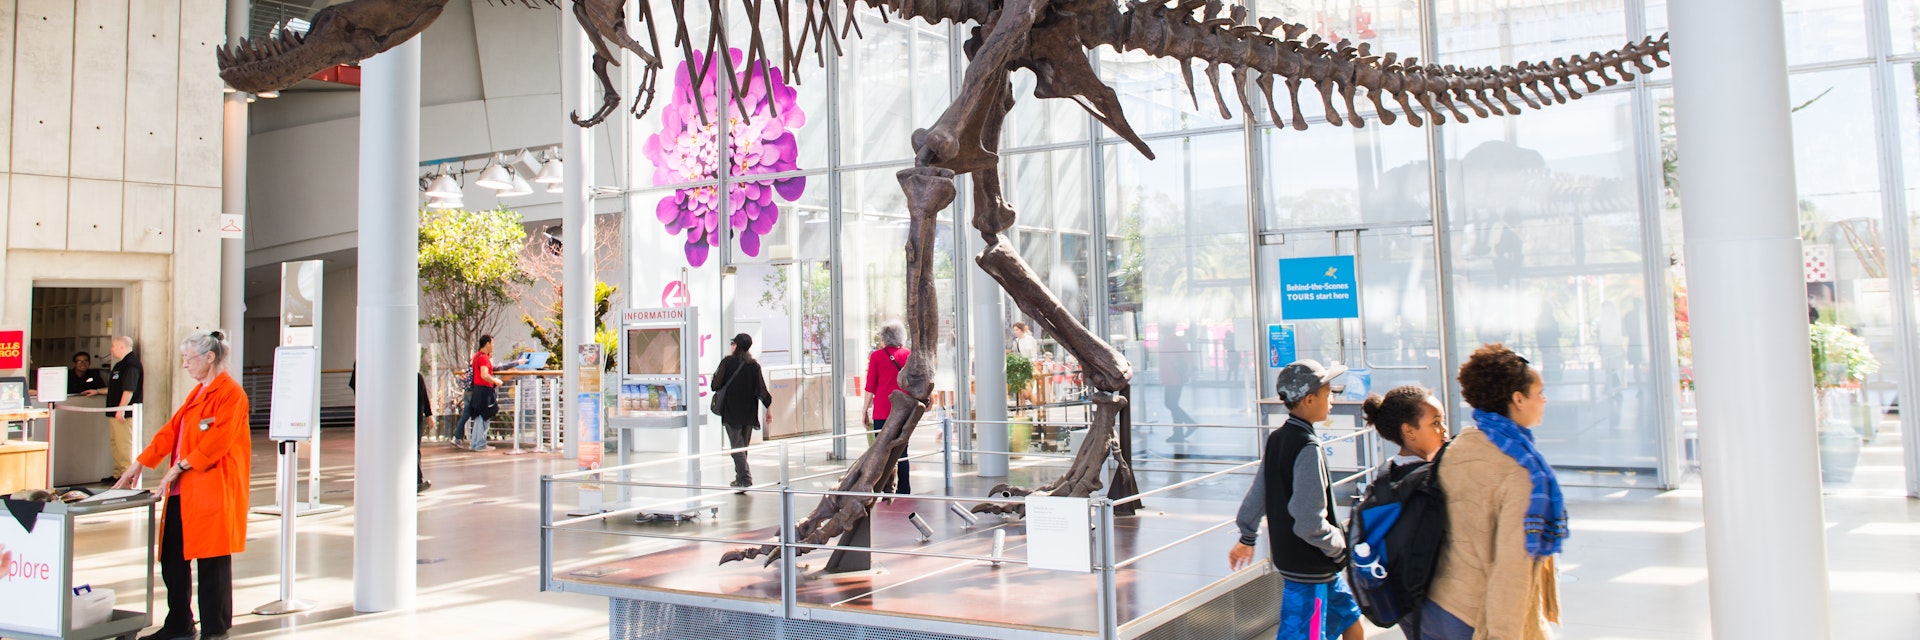 SAN FRANCISCO, USA - OCT 5, 2015: Tyrannosaur Rex skeleton in  California Academy of Sciences, a natural history museum in San Francisco, California. It was established in 1853